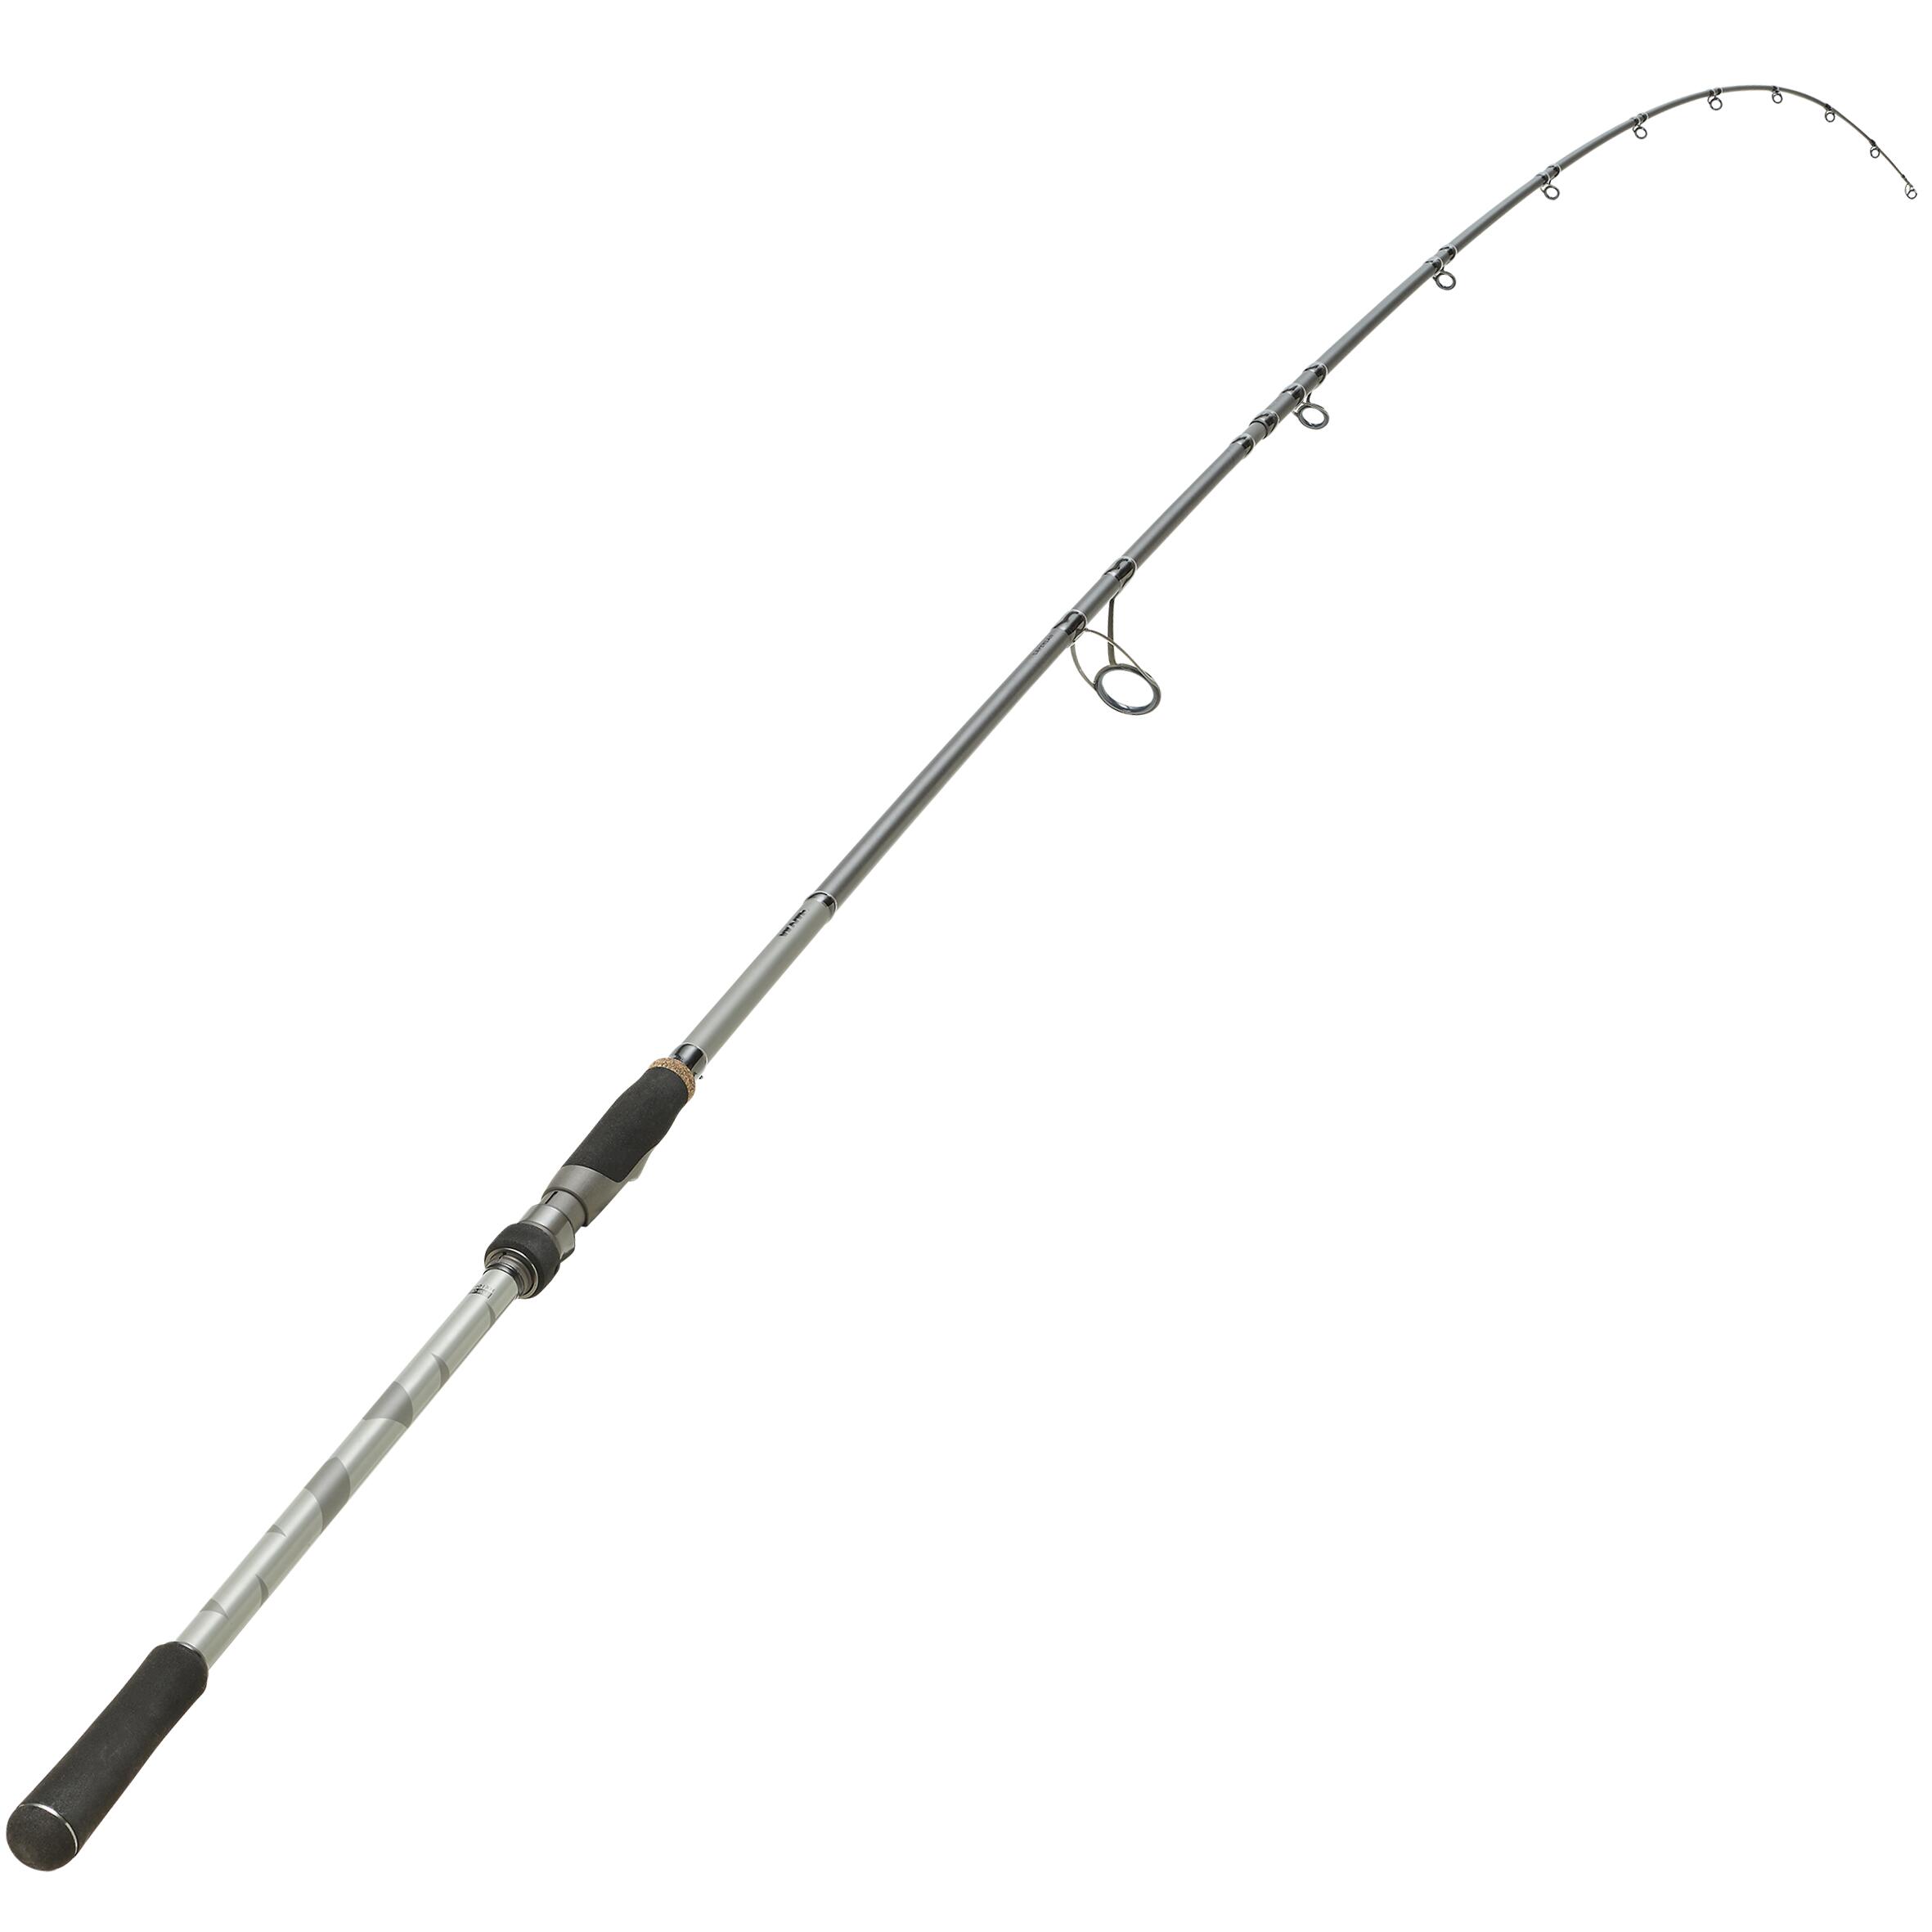 LURE FISHING ROD WXM-5 240 XH 2/11